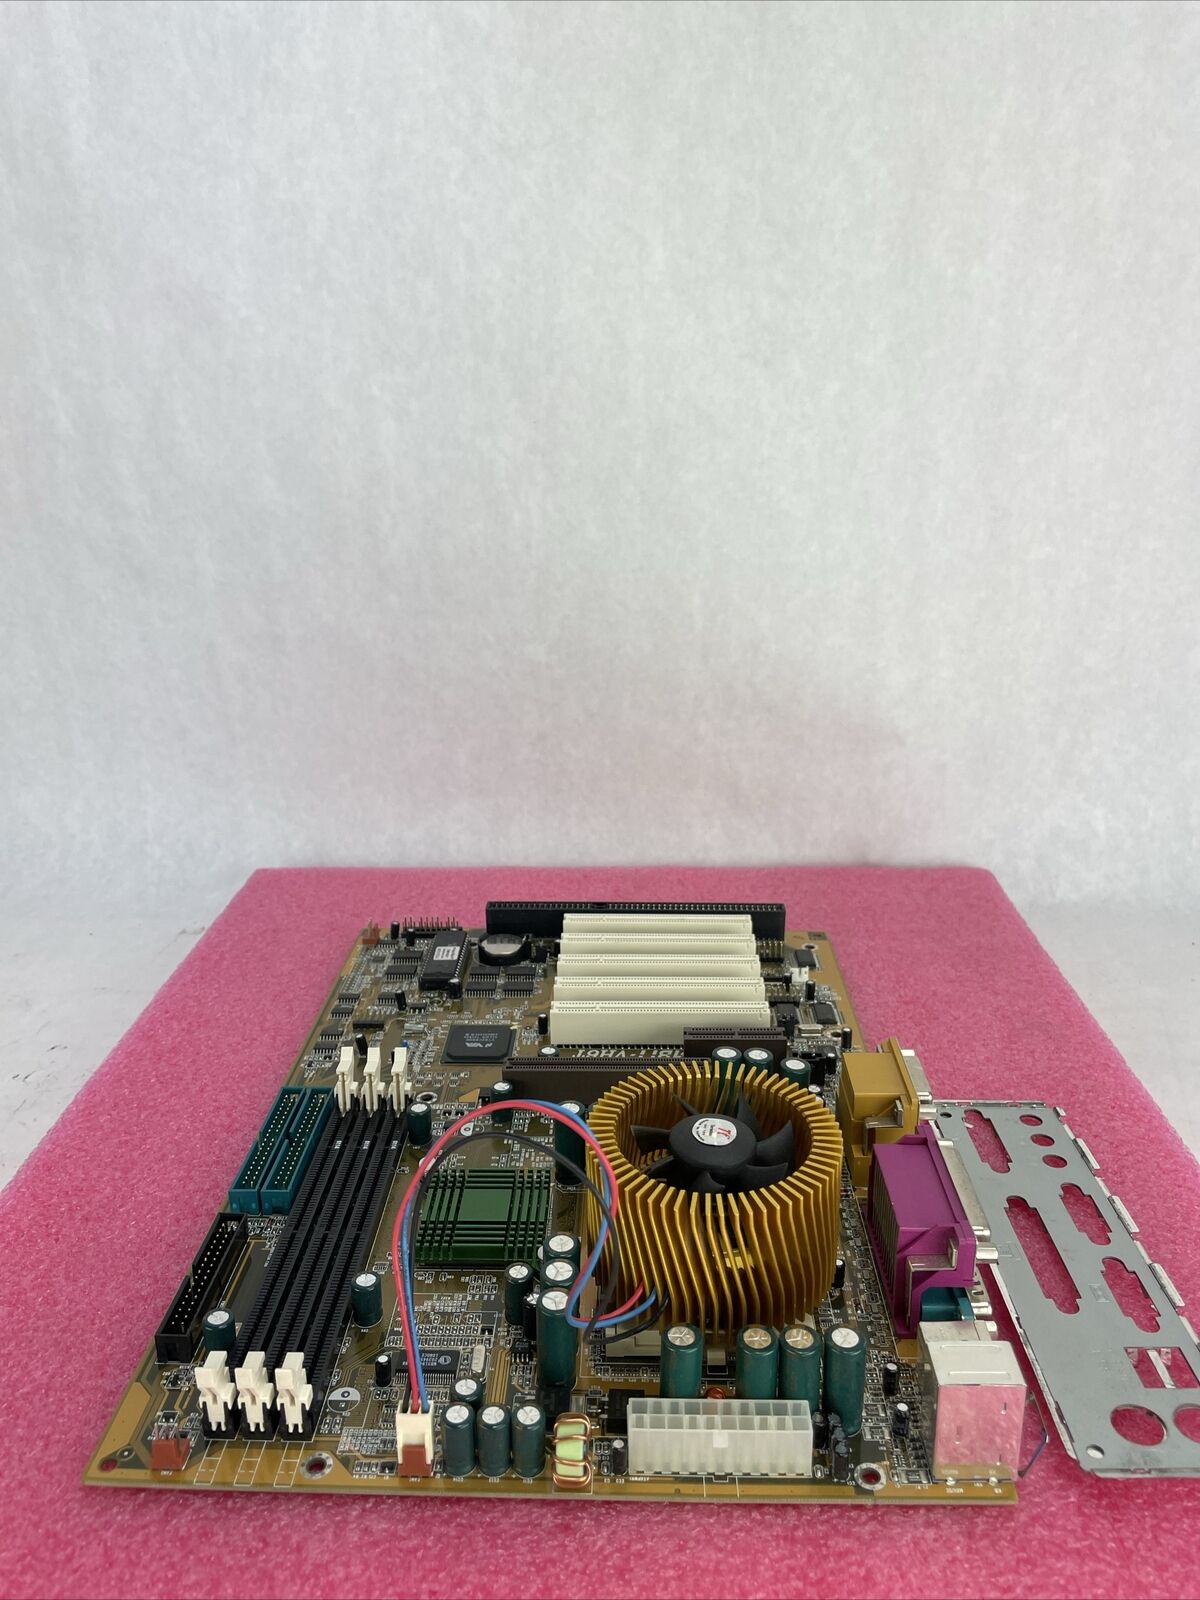 ABIT-VH6T Motherboard Intel Pentium III 333MHz No RAM w/Shield